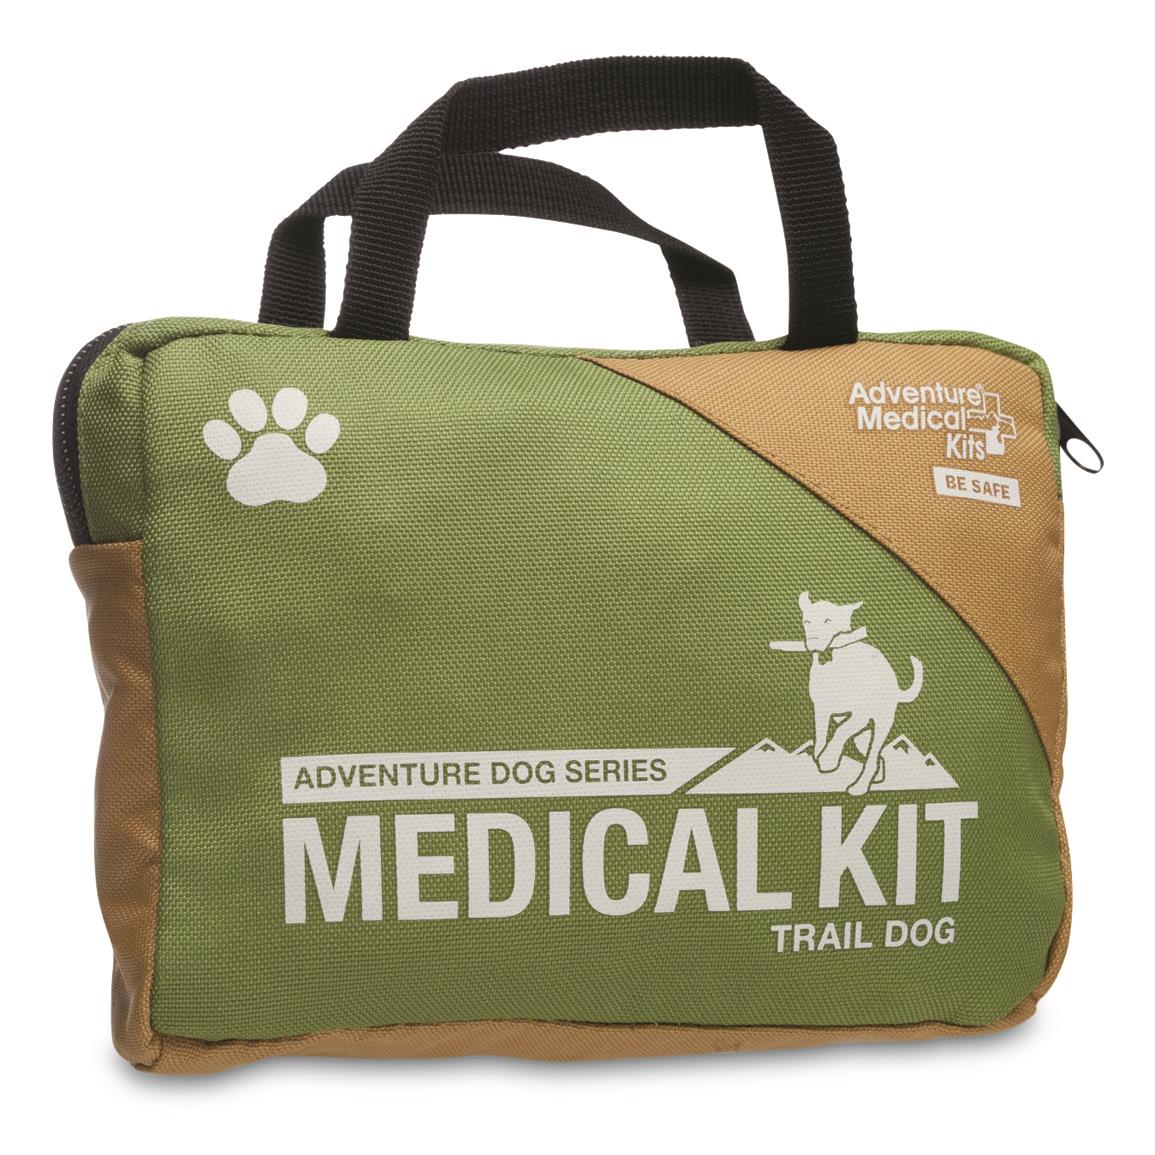 Adventure® Medical Kits Trail Dog Medical Kit